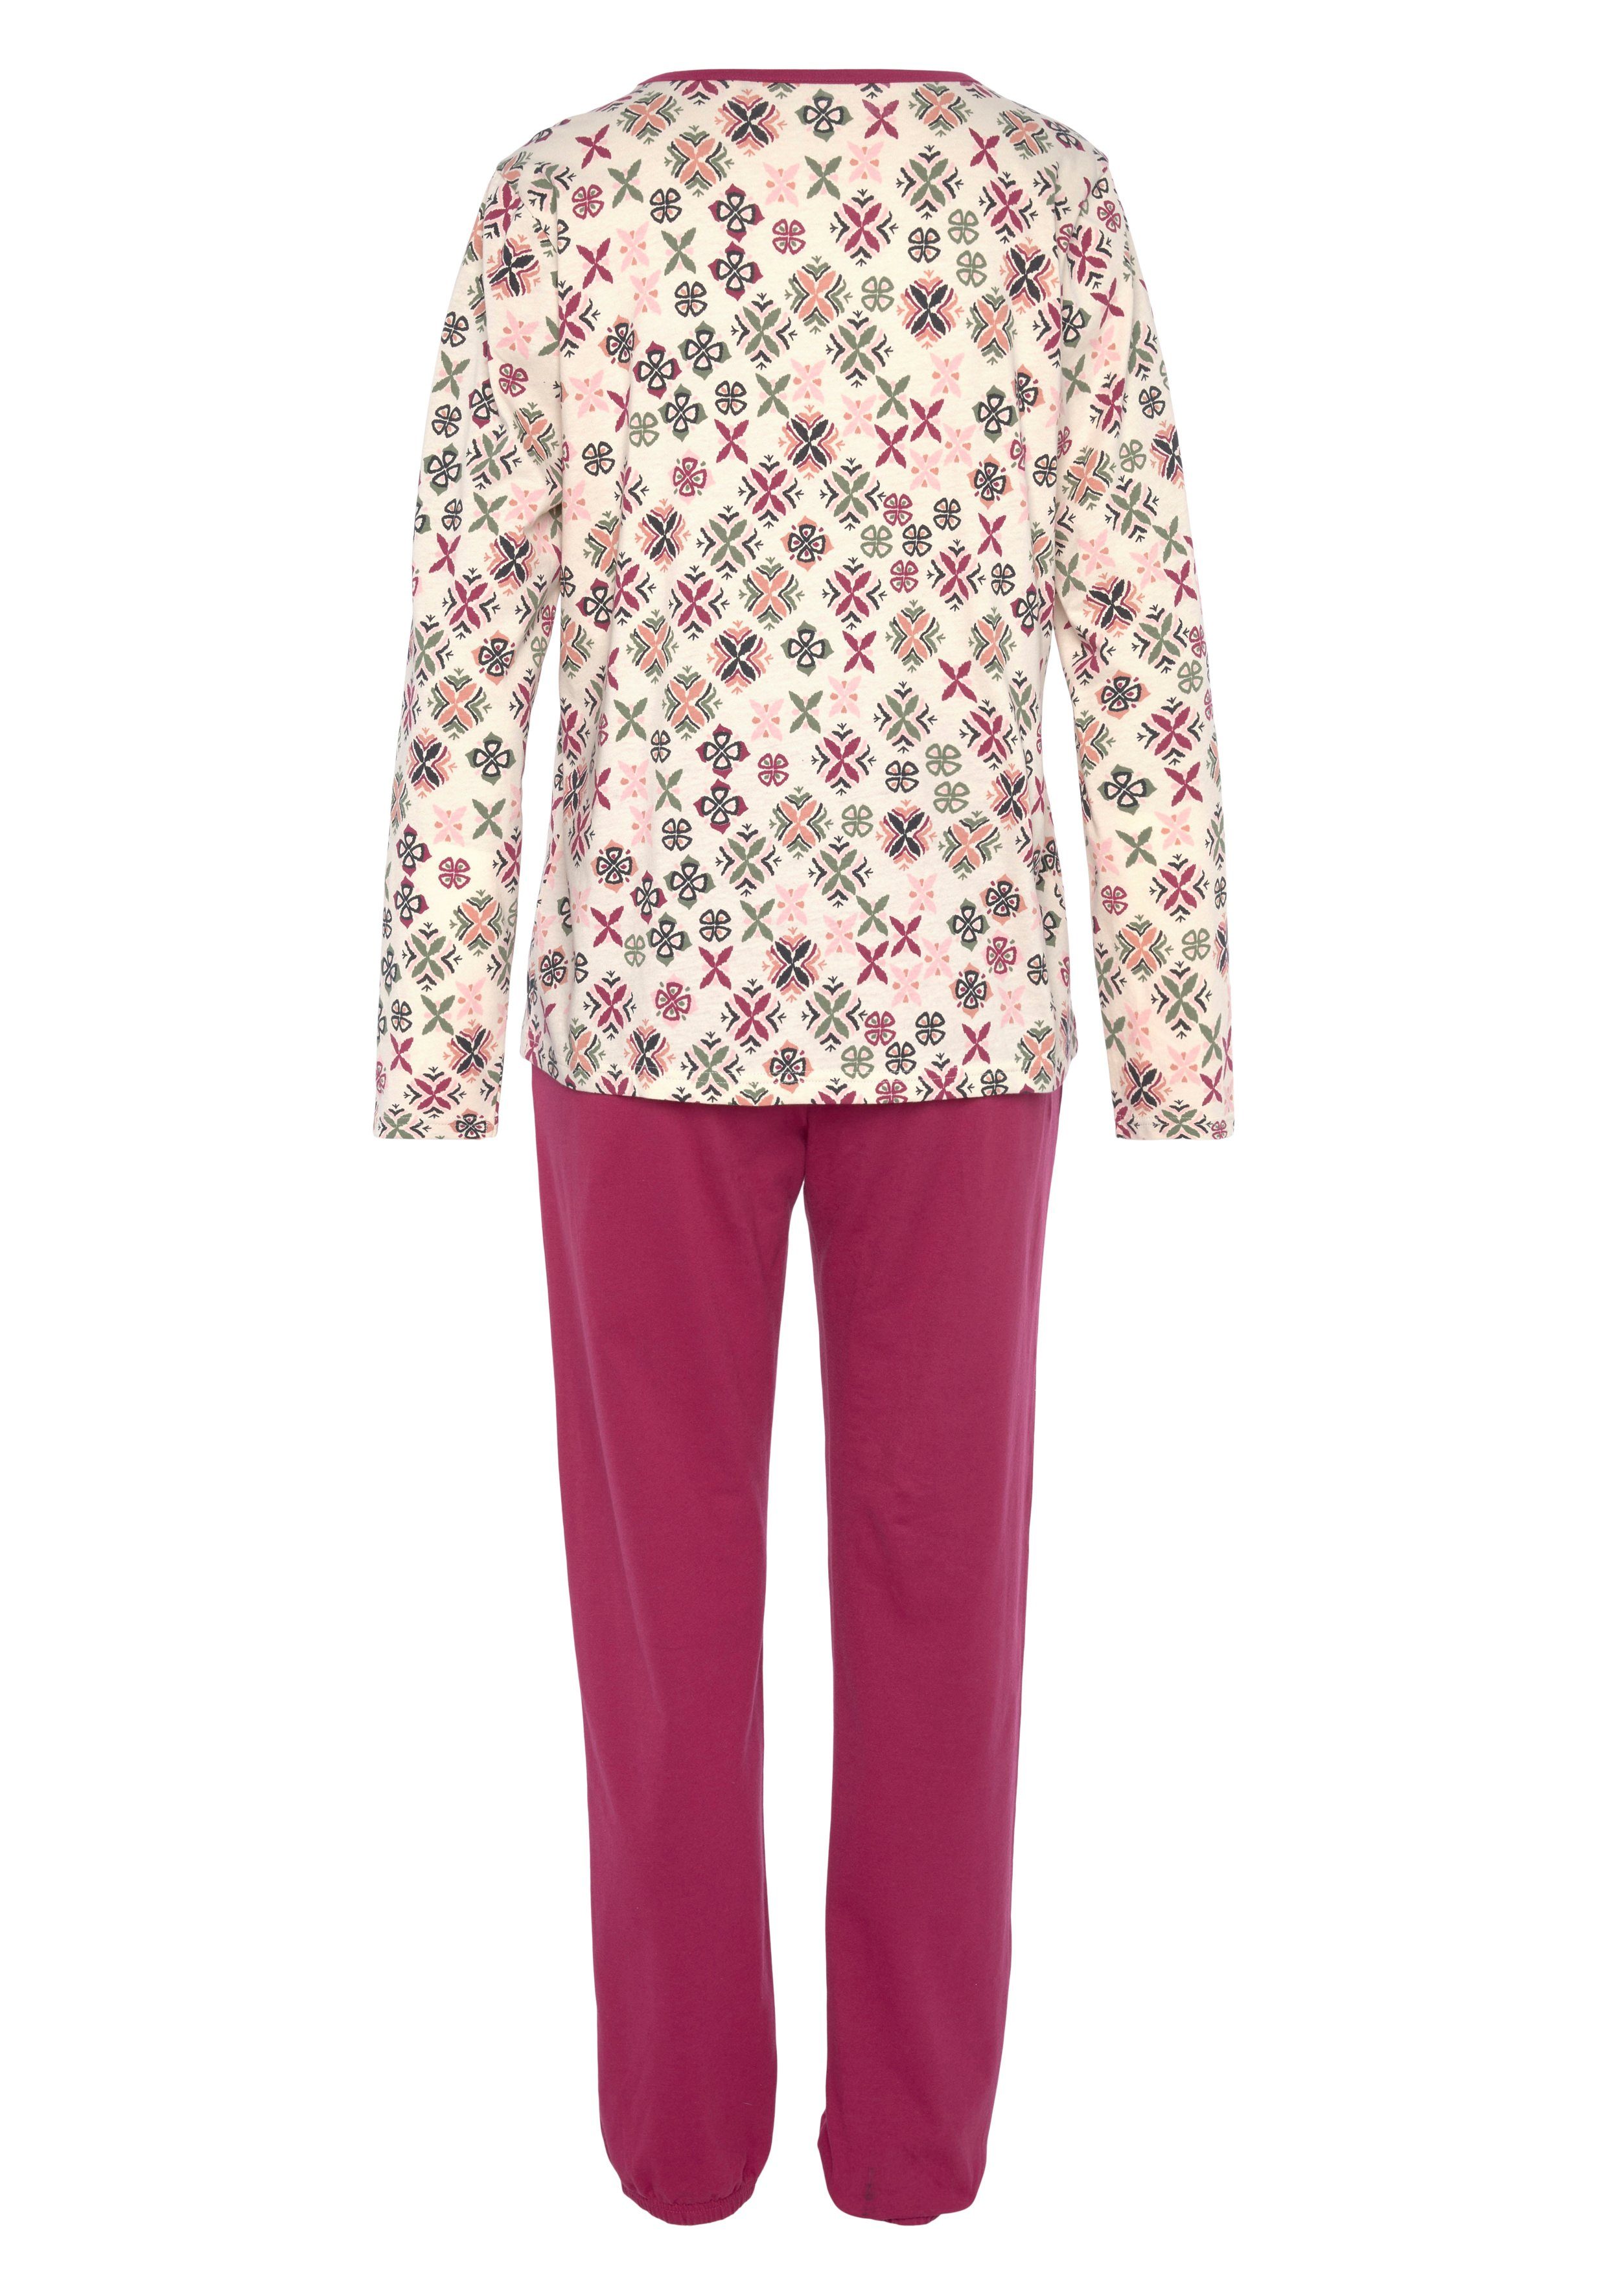 Vivance Dreams Pyjama burgunder-gemustert 2 (Packung, tlg) Alloverdruck grafisch-floralem mit